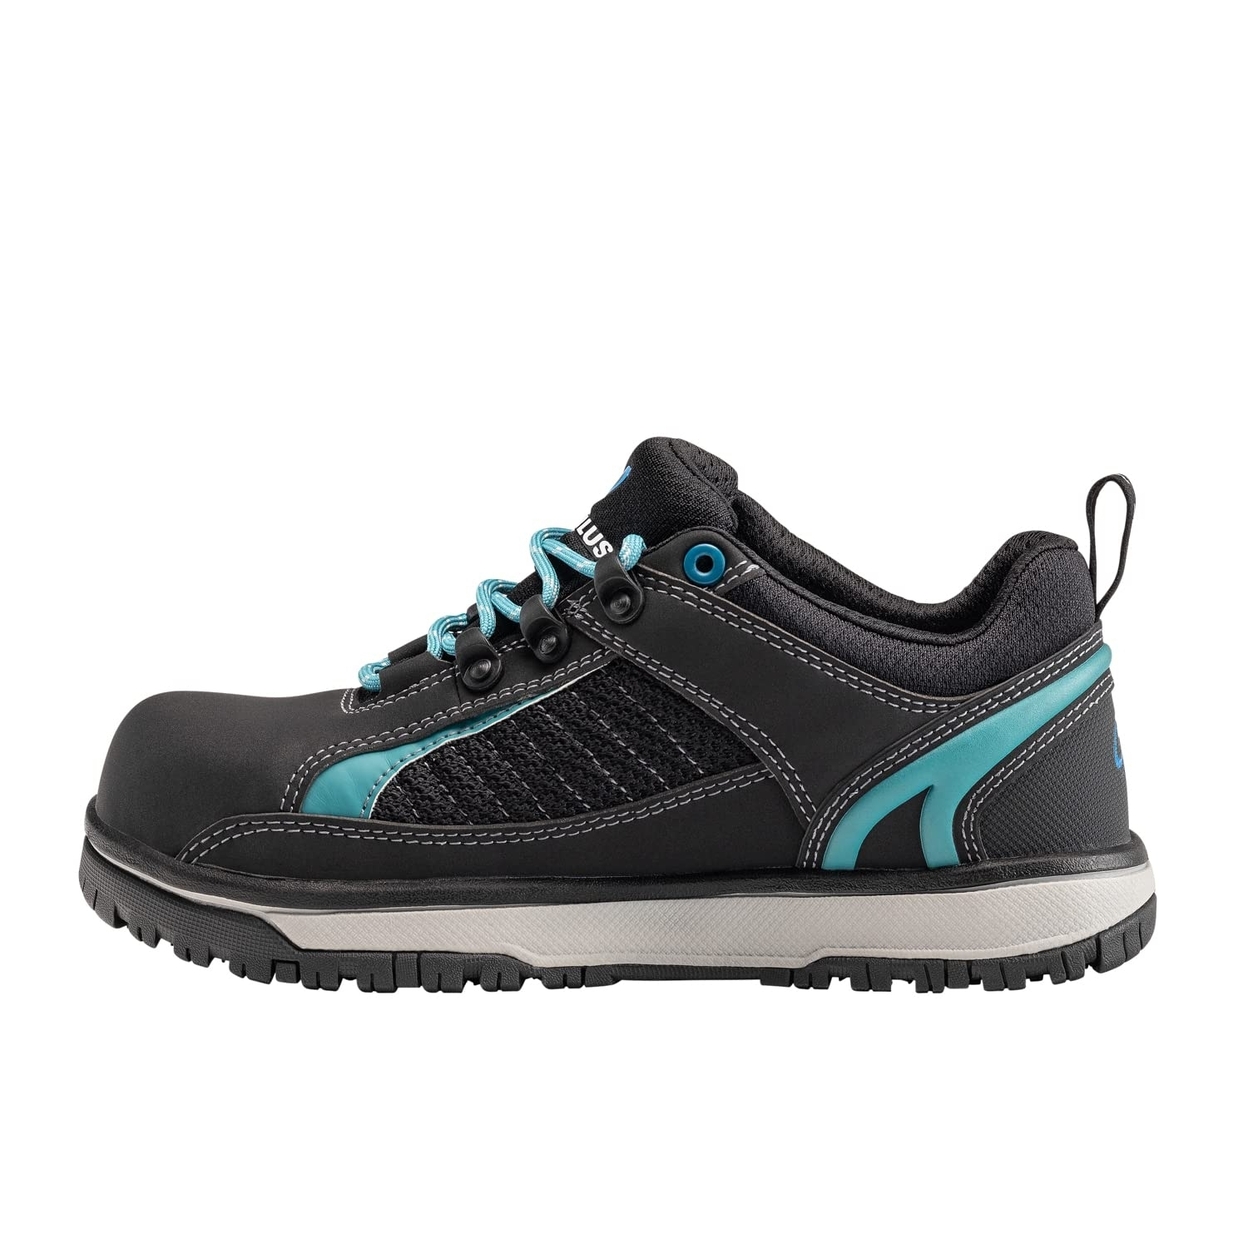 FSI FOOTWEAR SPECIALTIES INTERNATIONAL NAUTILUS Nautilus Women's Alloy Toe EH Athletic Work Shoe Black/Blue - N1466 BLACK &BLUE - BLACK &BLU